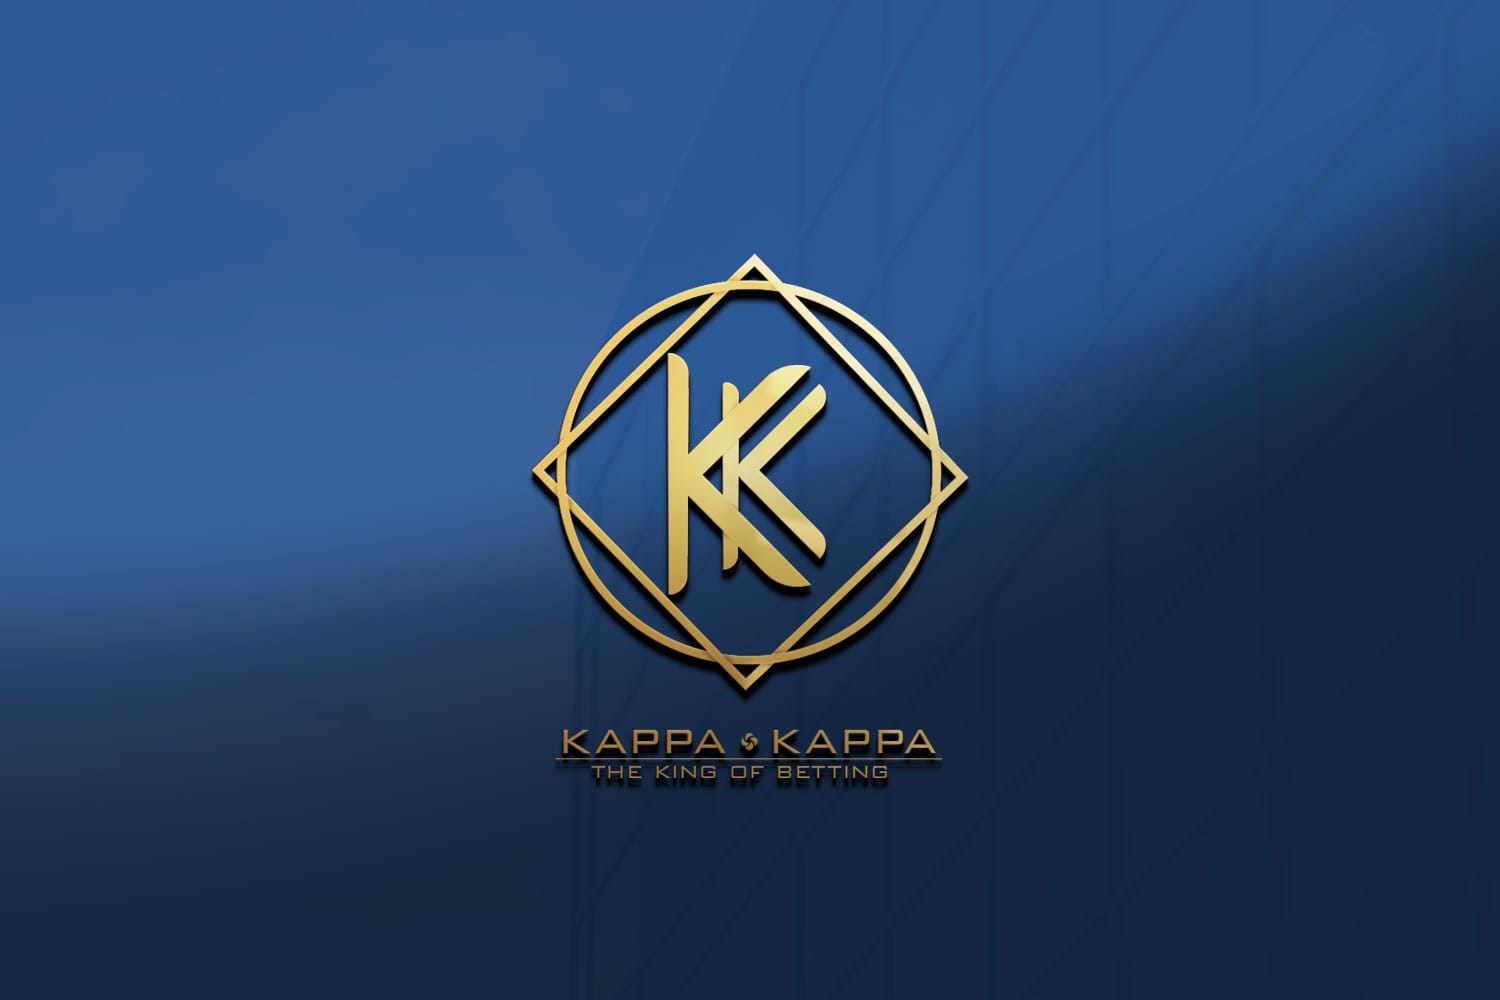 Kappa Kappa